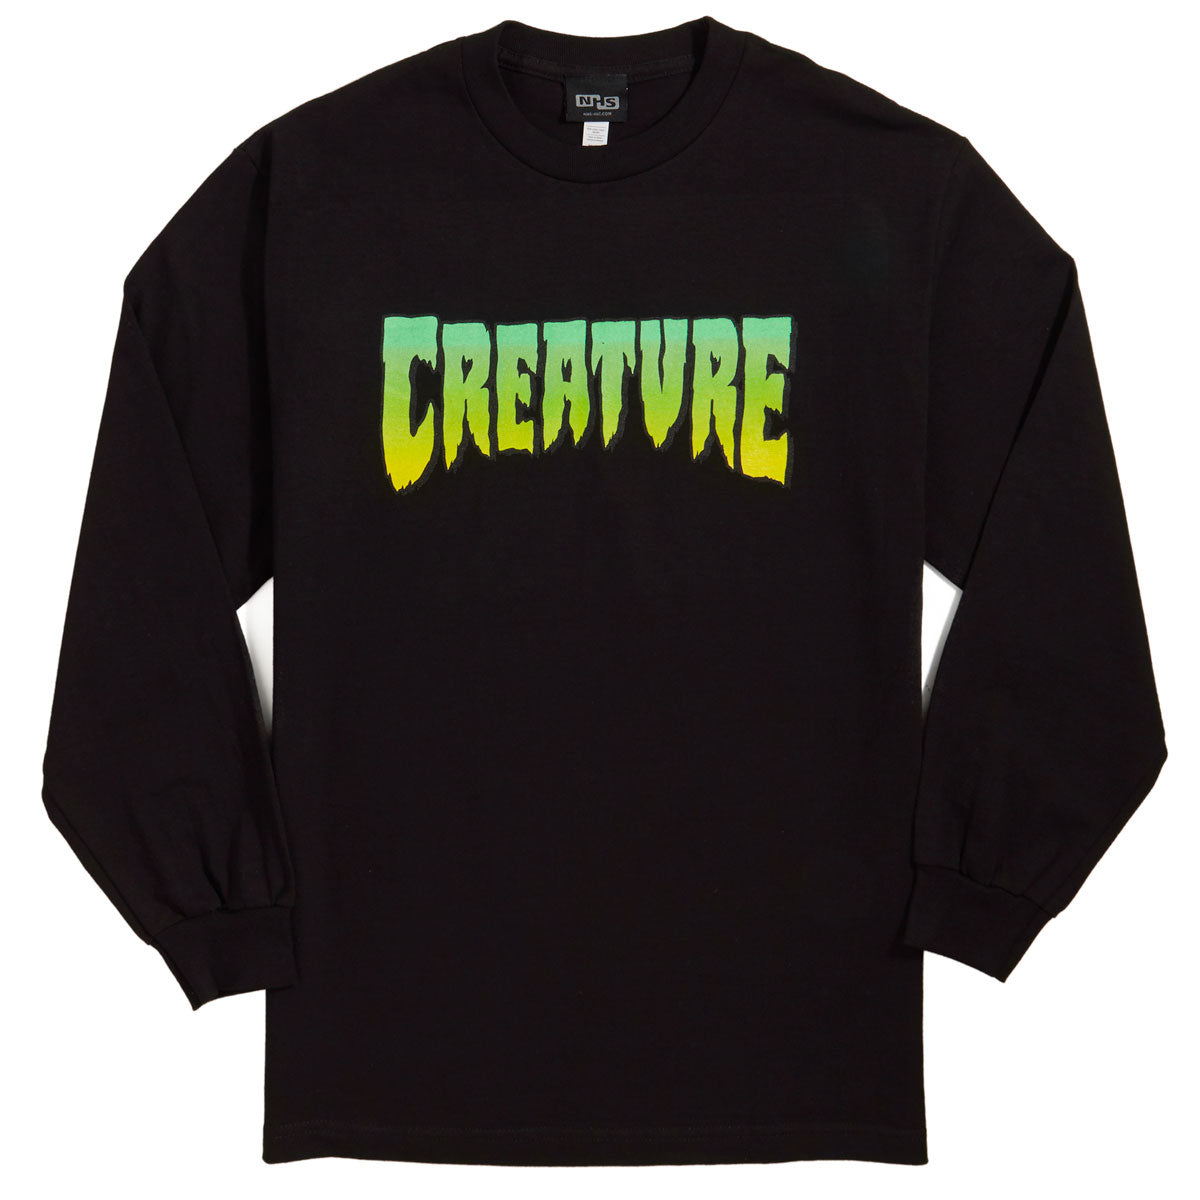 Creature Logo Long Sleeve T-Shirt - Black image 1